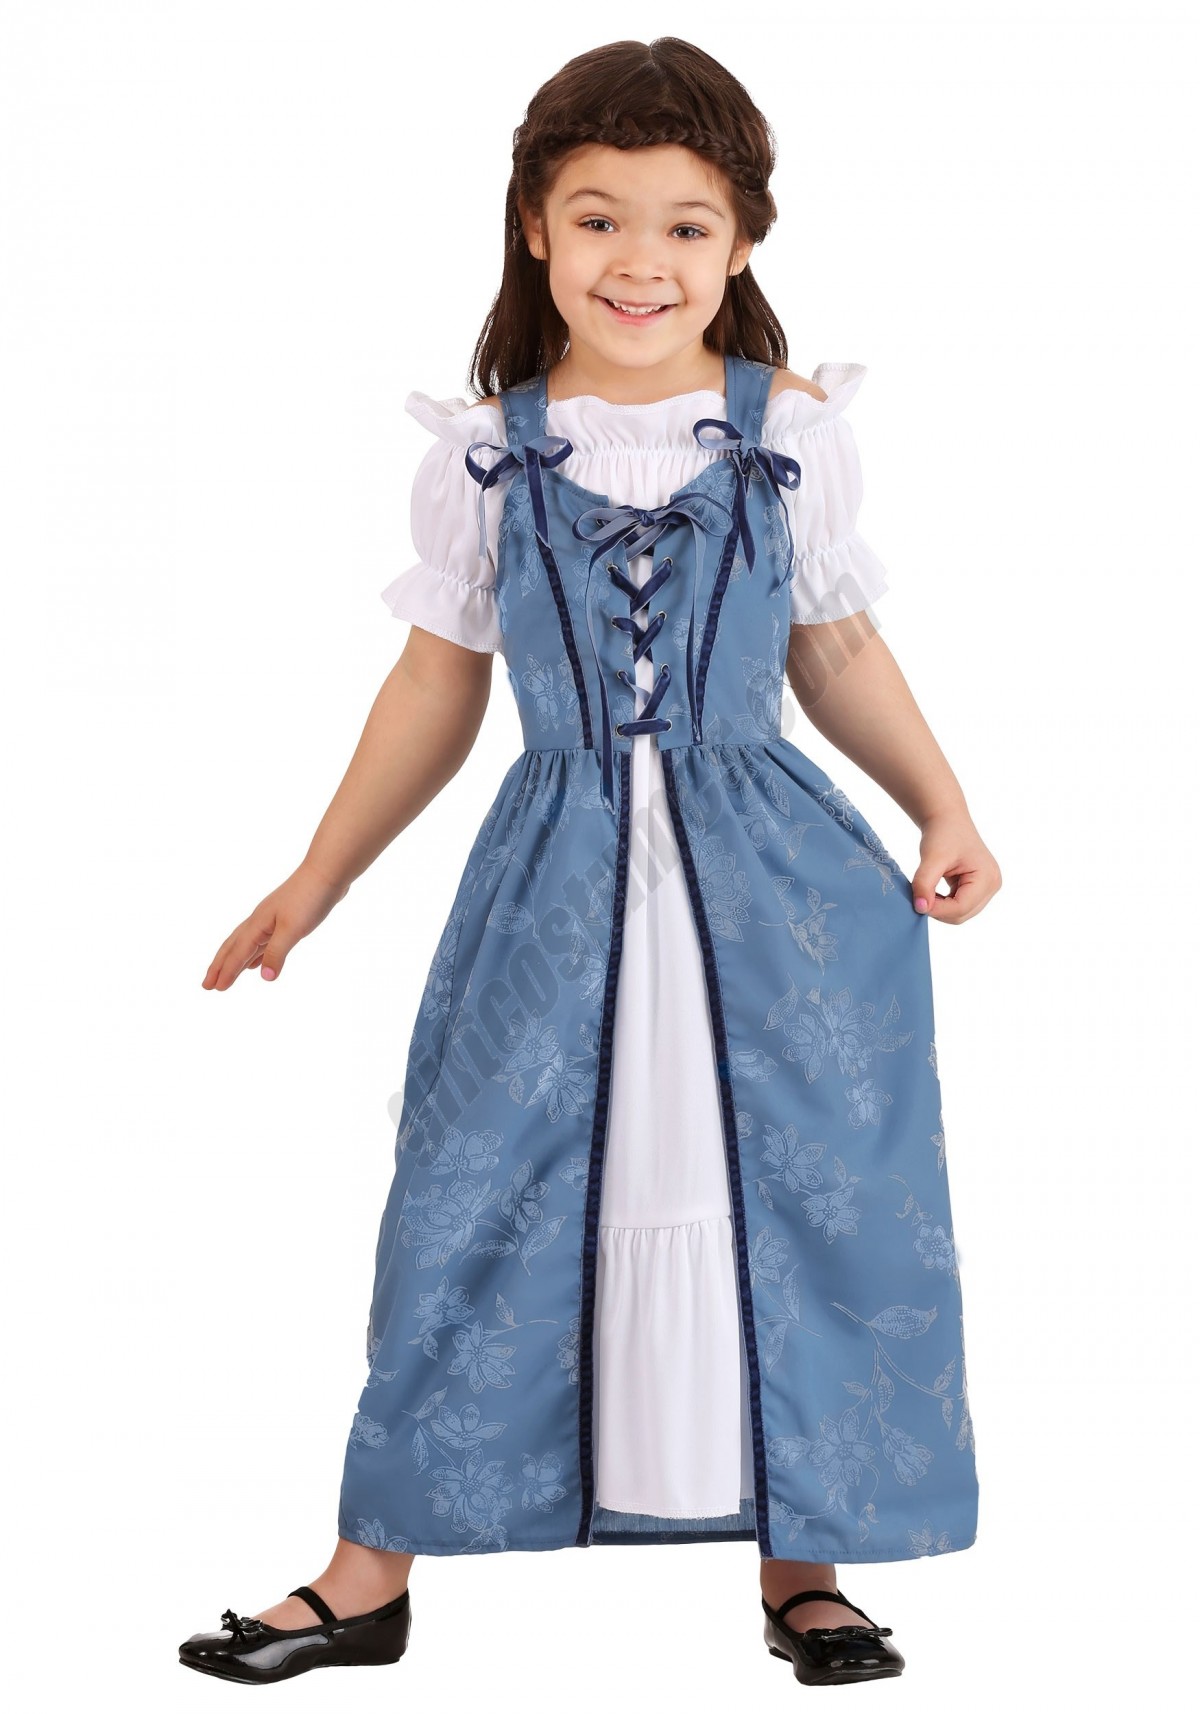 Toddler Girls Renaissance Villager Costume Promotions - -0